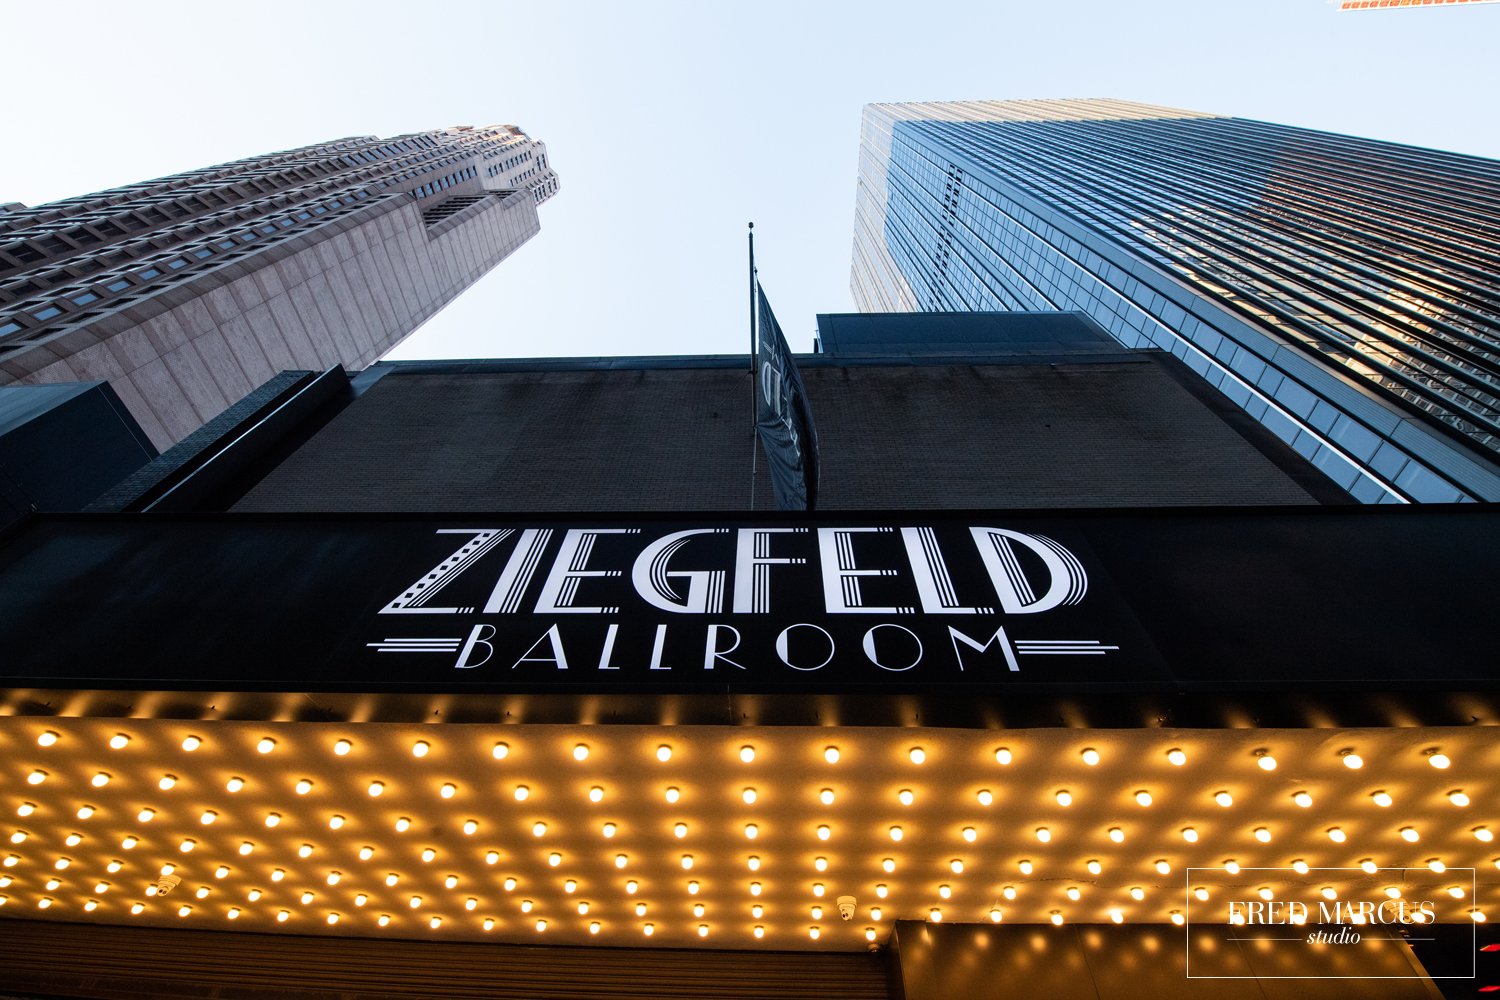 Ziegfeld Ballroom